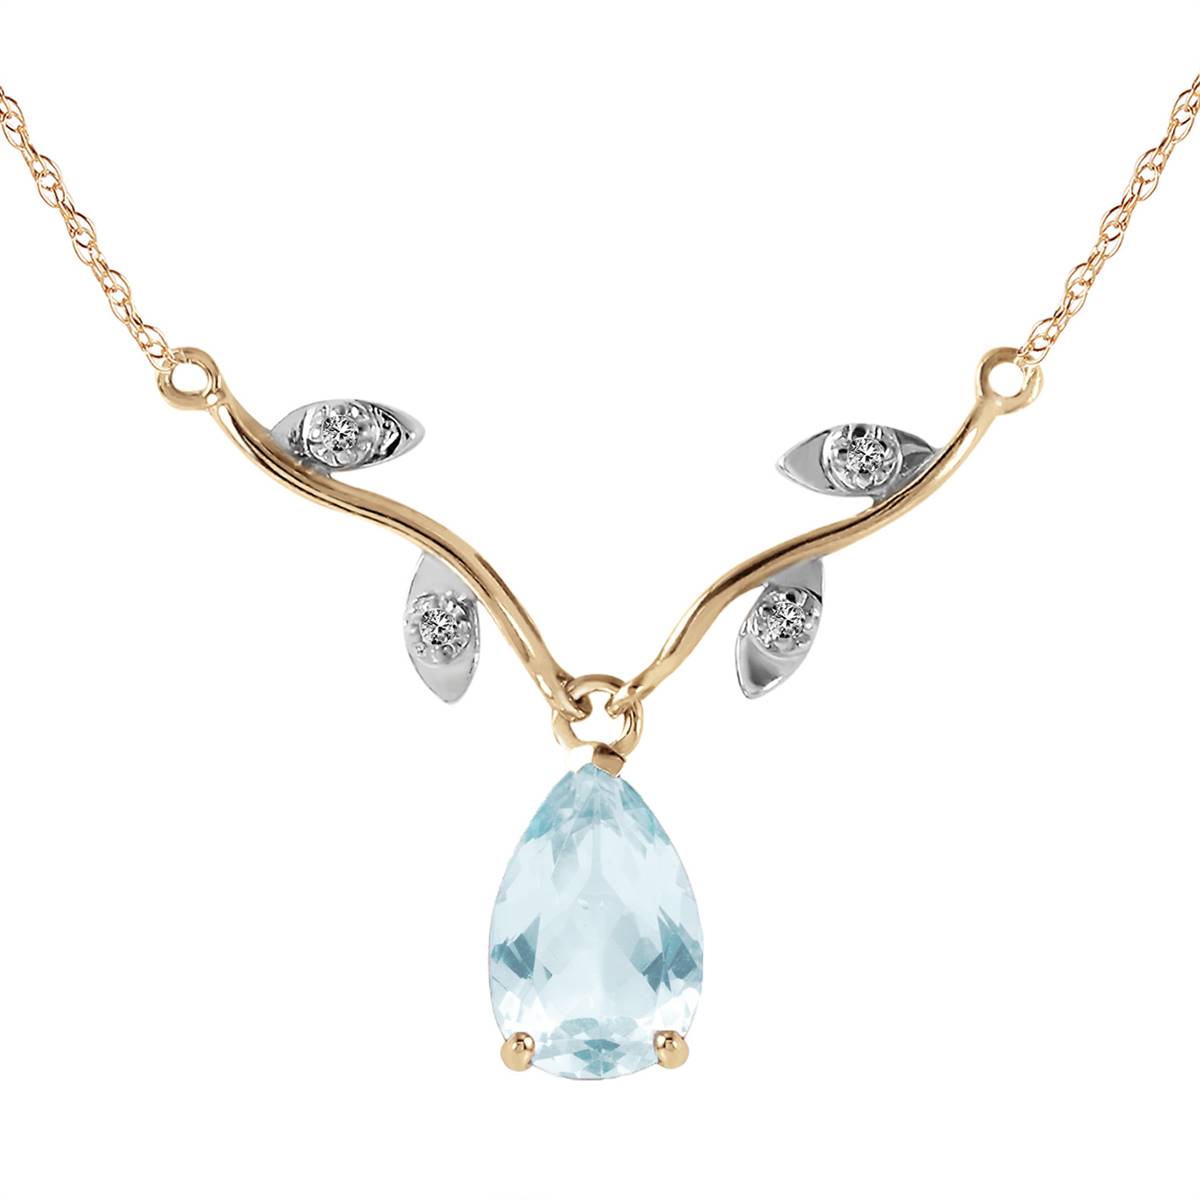 1.52 Carat 14K Solid Yellow Gold Necklace Natural Diamond Aquamarine